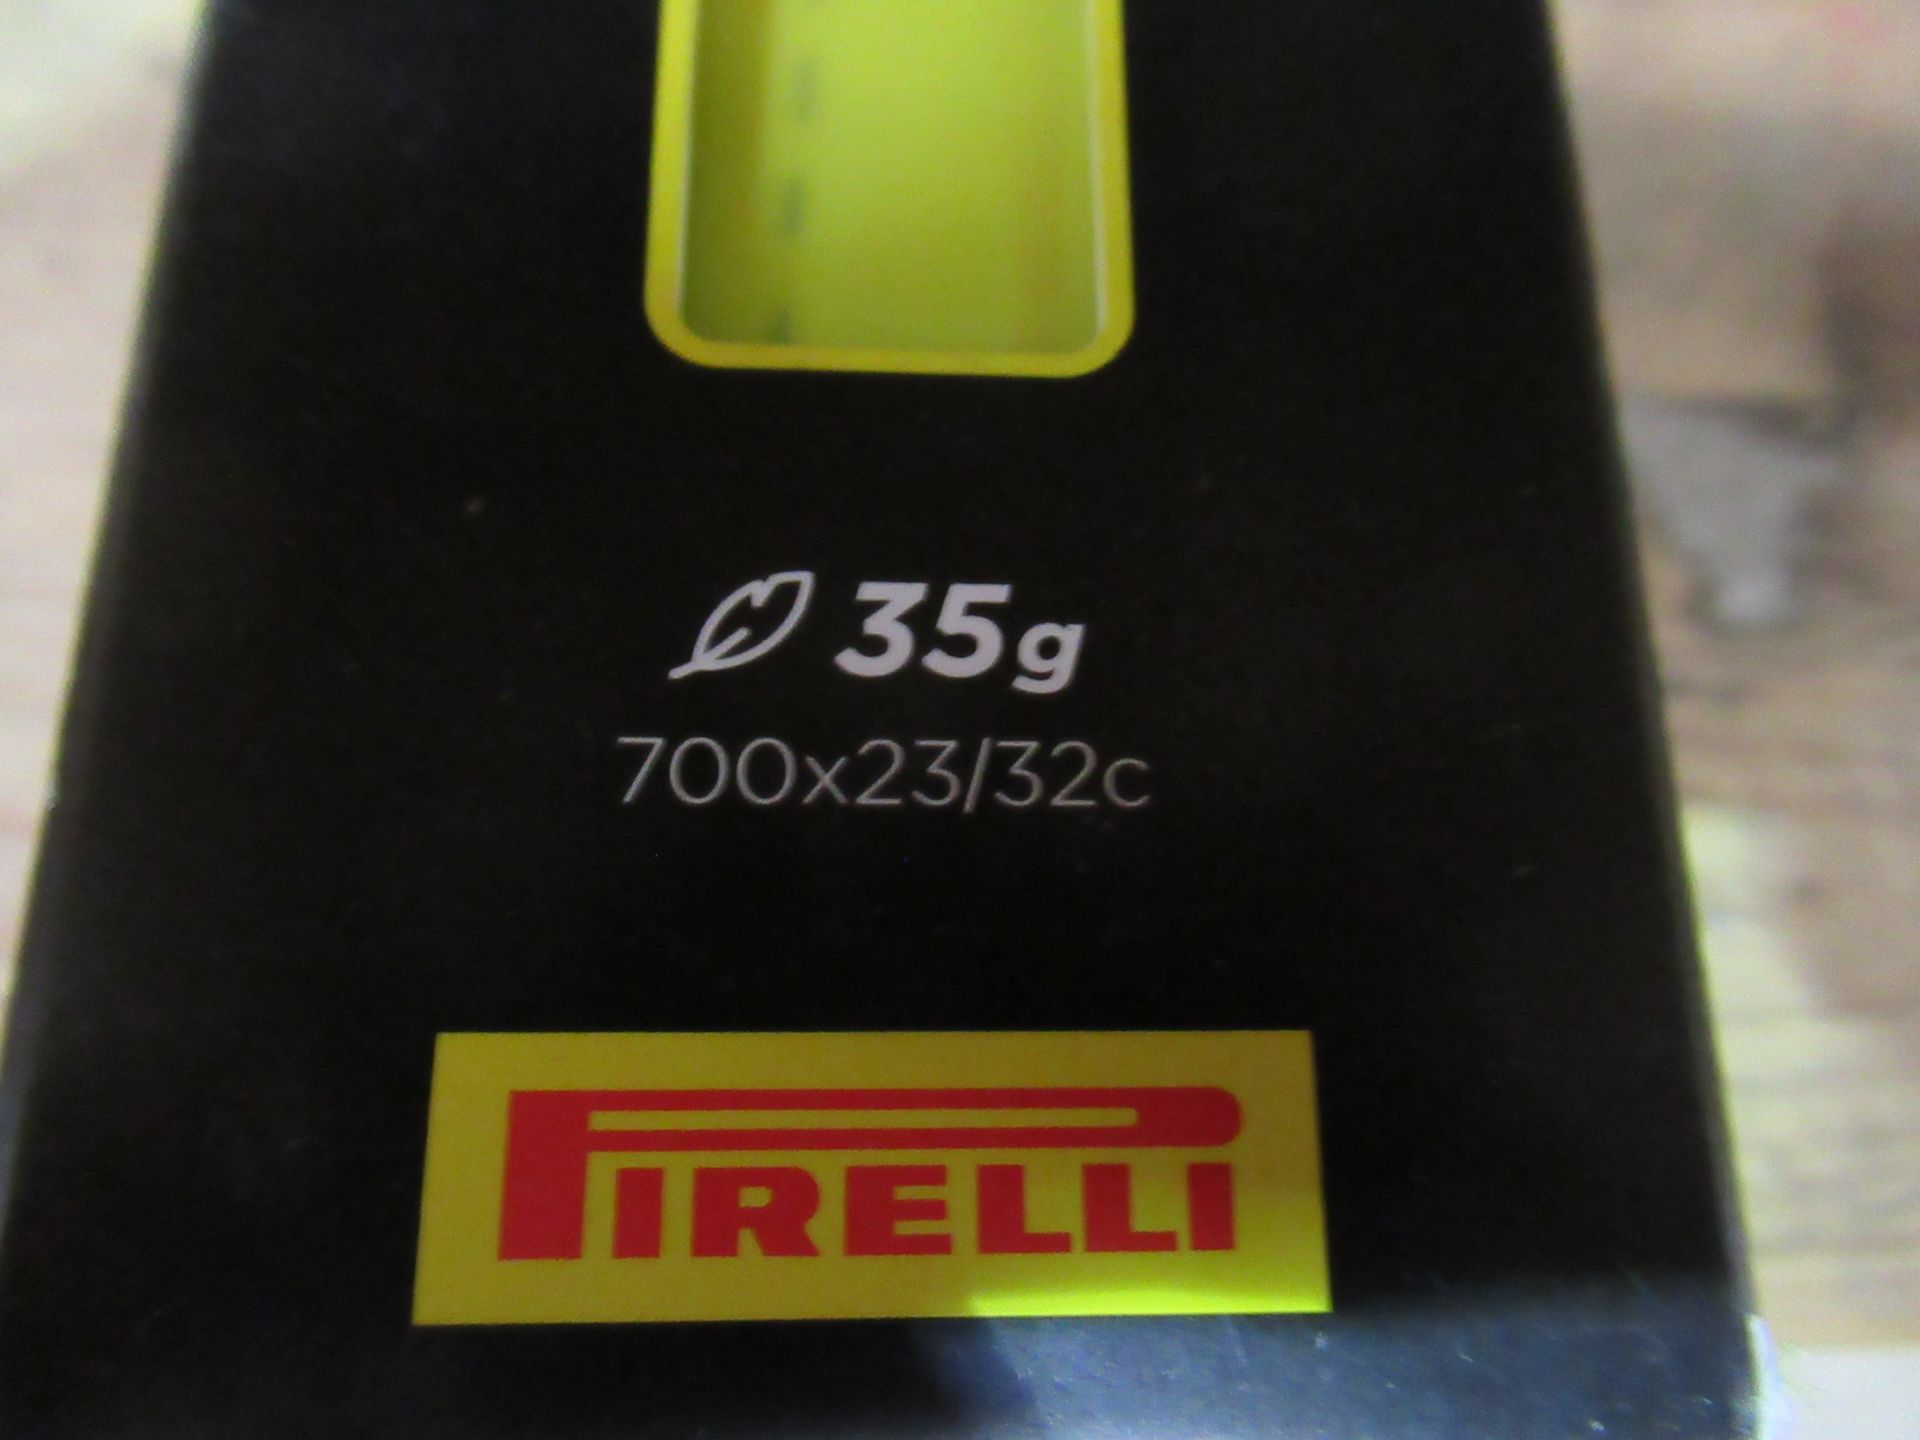 7 x Pirelli P Zero 700x23/32c inner tubes (RRP£29.99 each) - Bild 3 aus 8